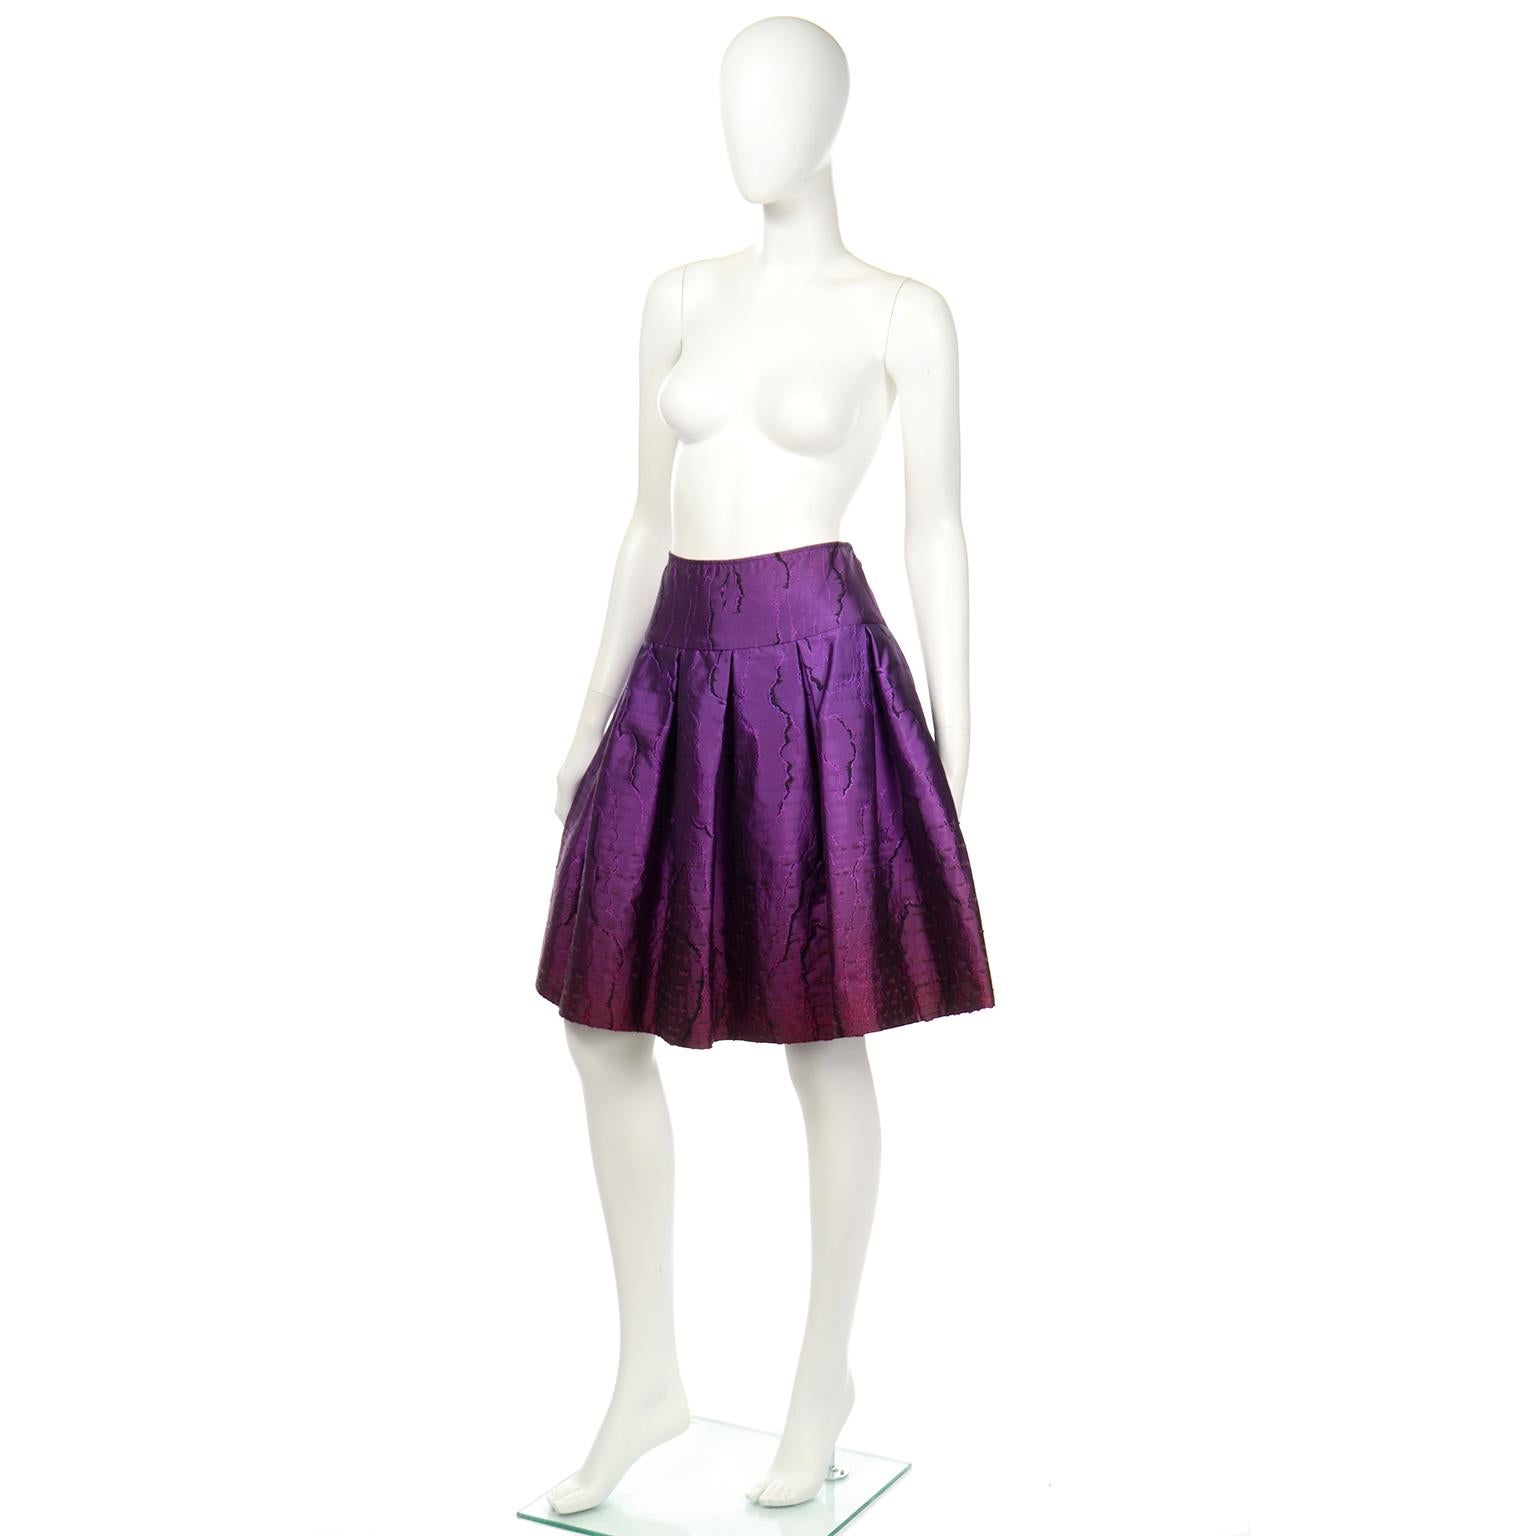 Oscar de la Renta Fall 2008 Purple Textured Skirt Runway Documented For Sale 2